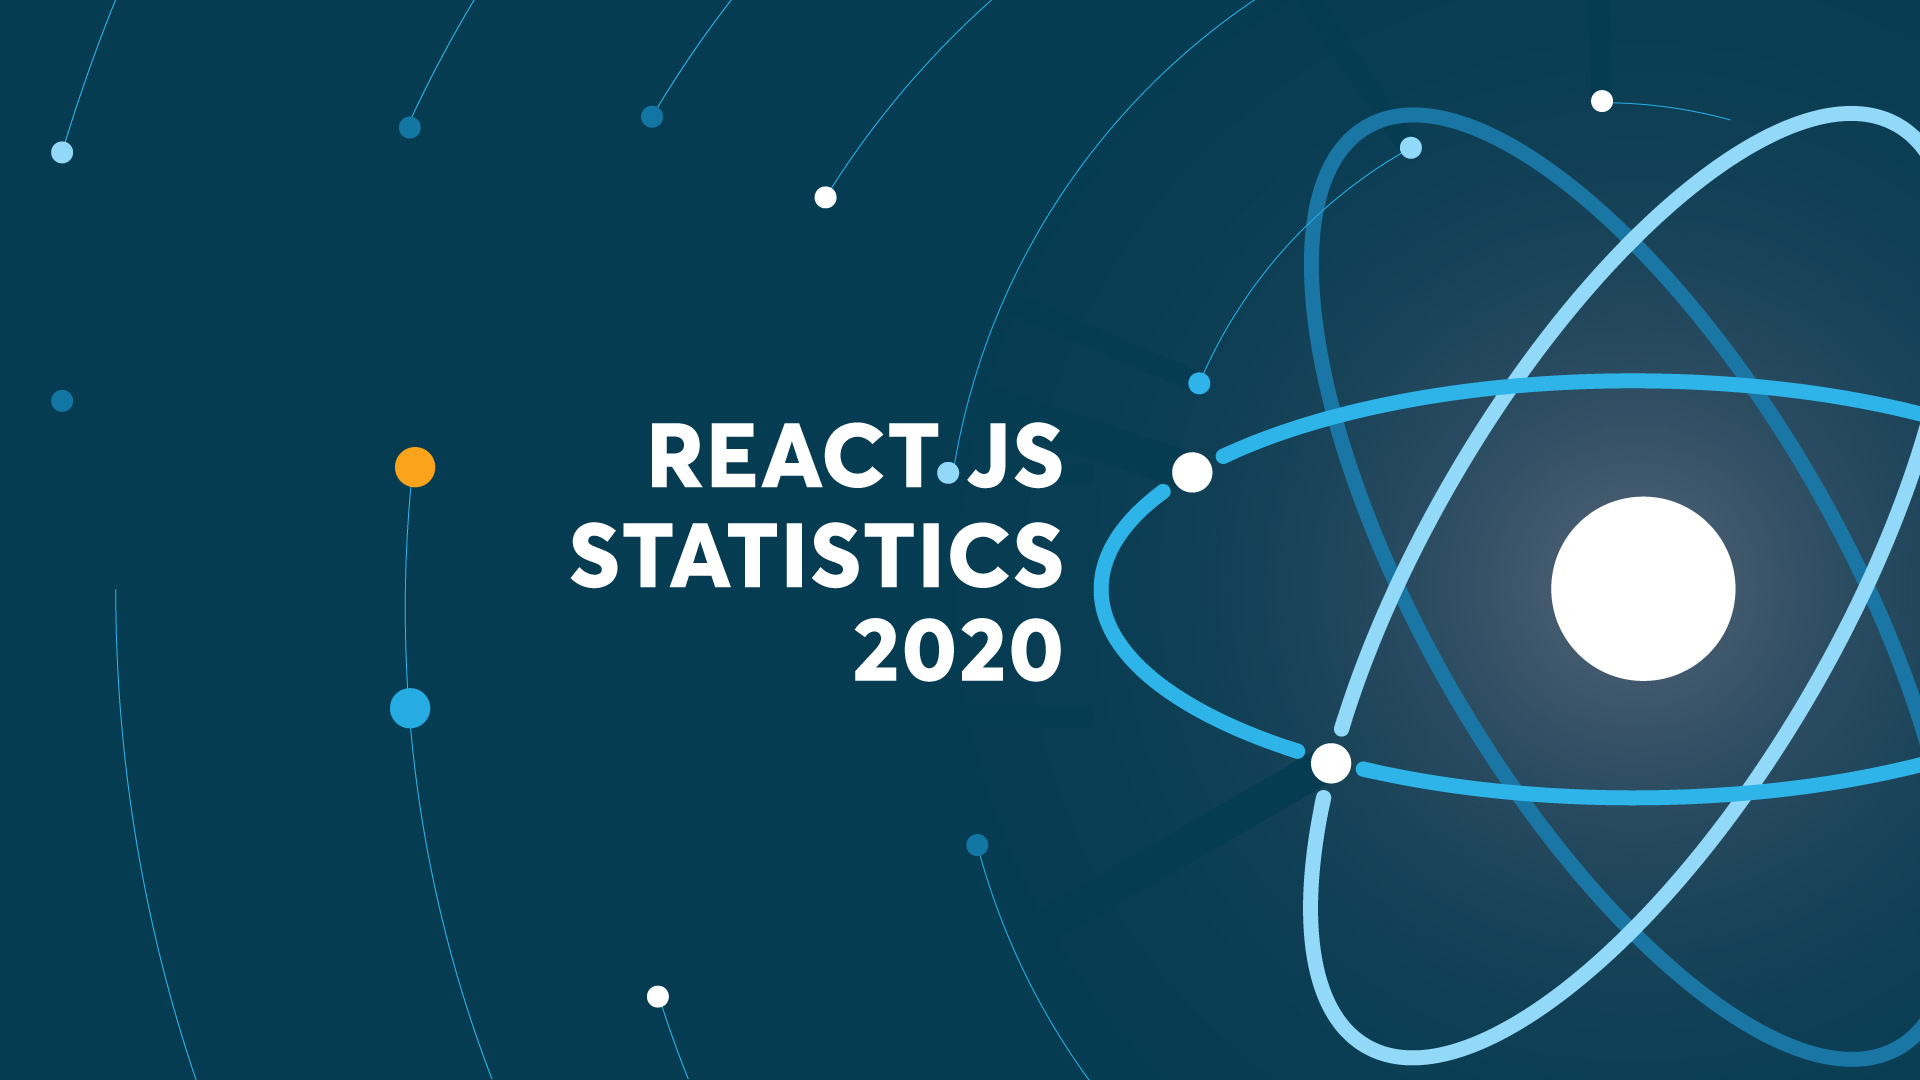 React.js statistics